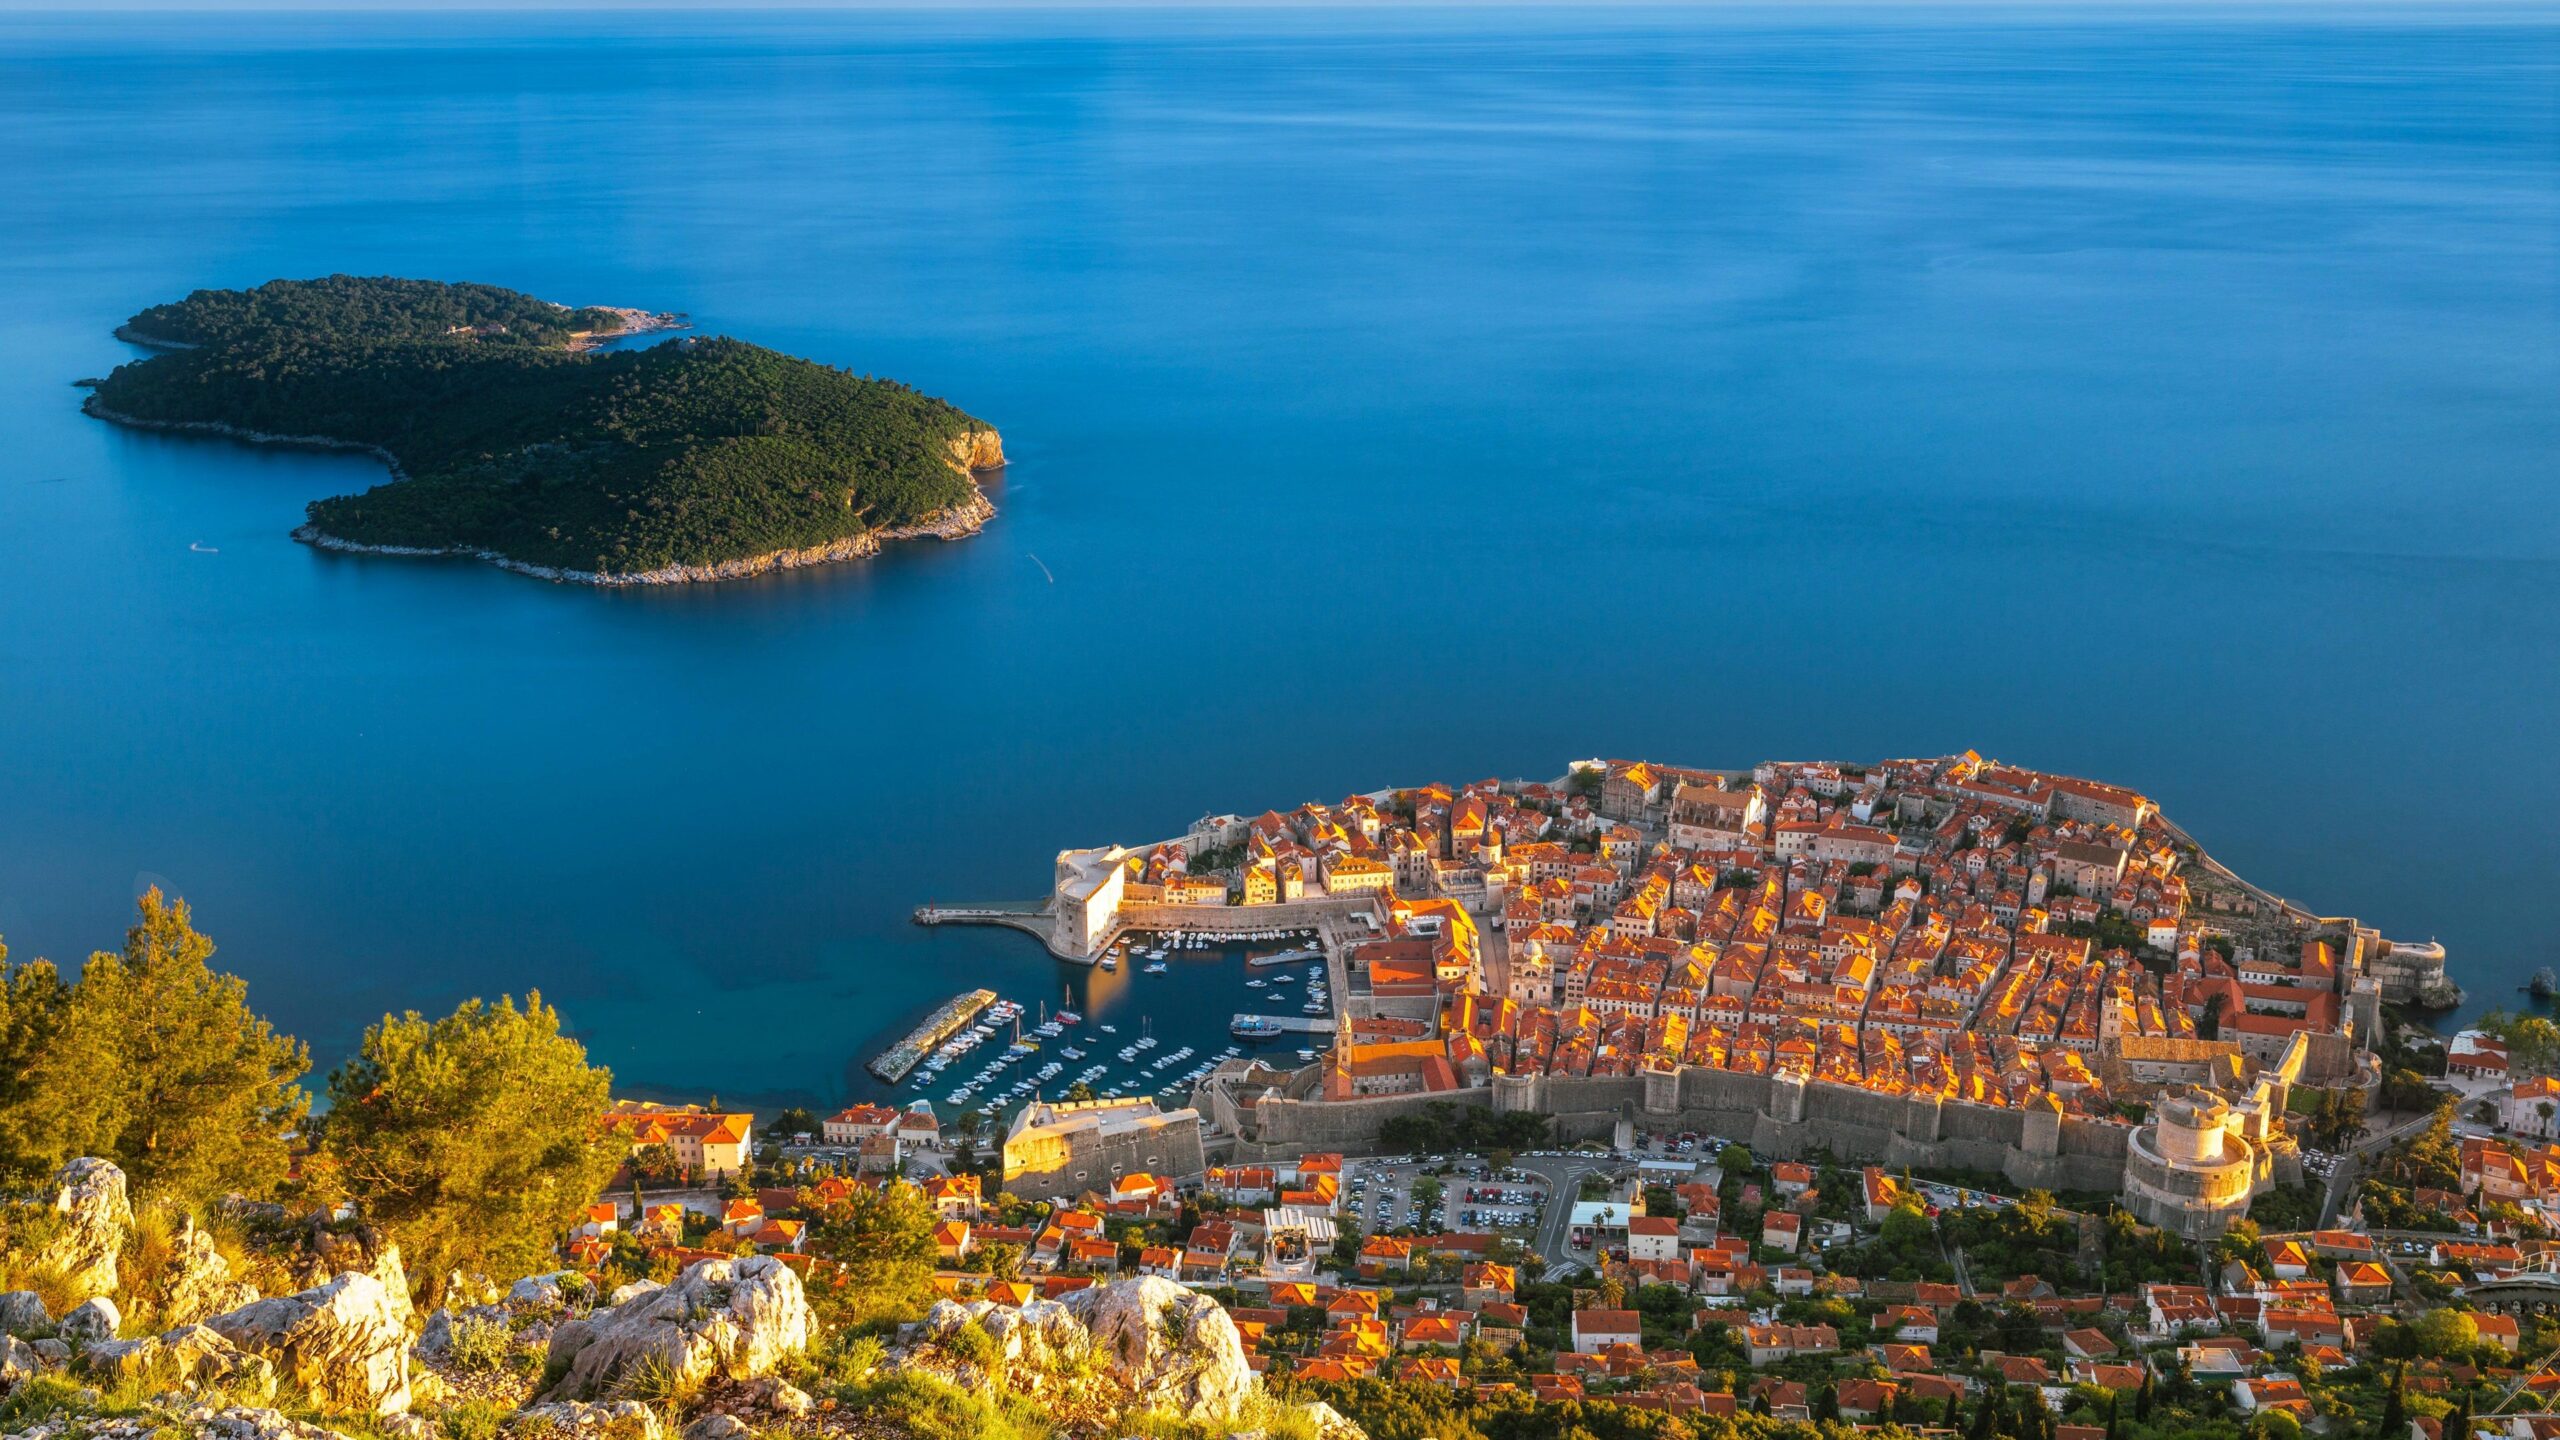 Wallpapers Croatia, Dubrovnik, sea, island, houses, buildings